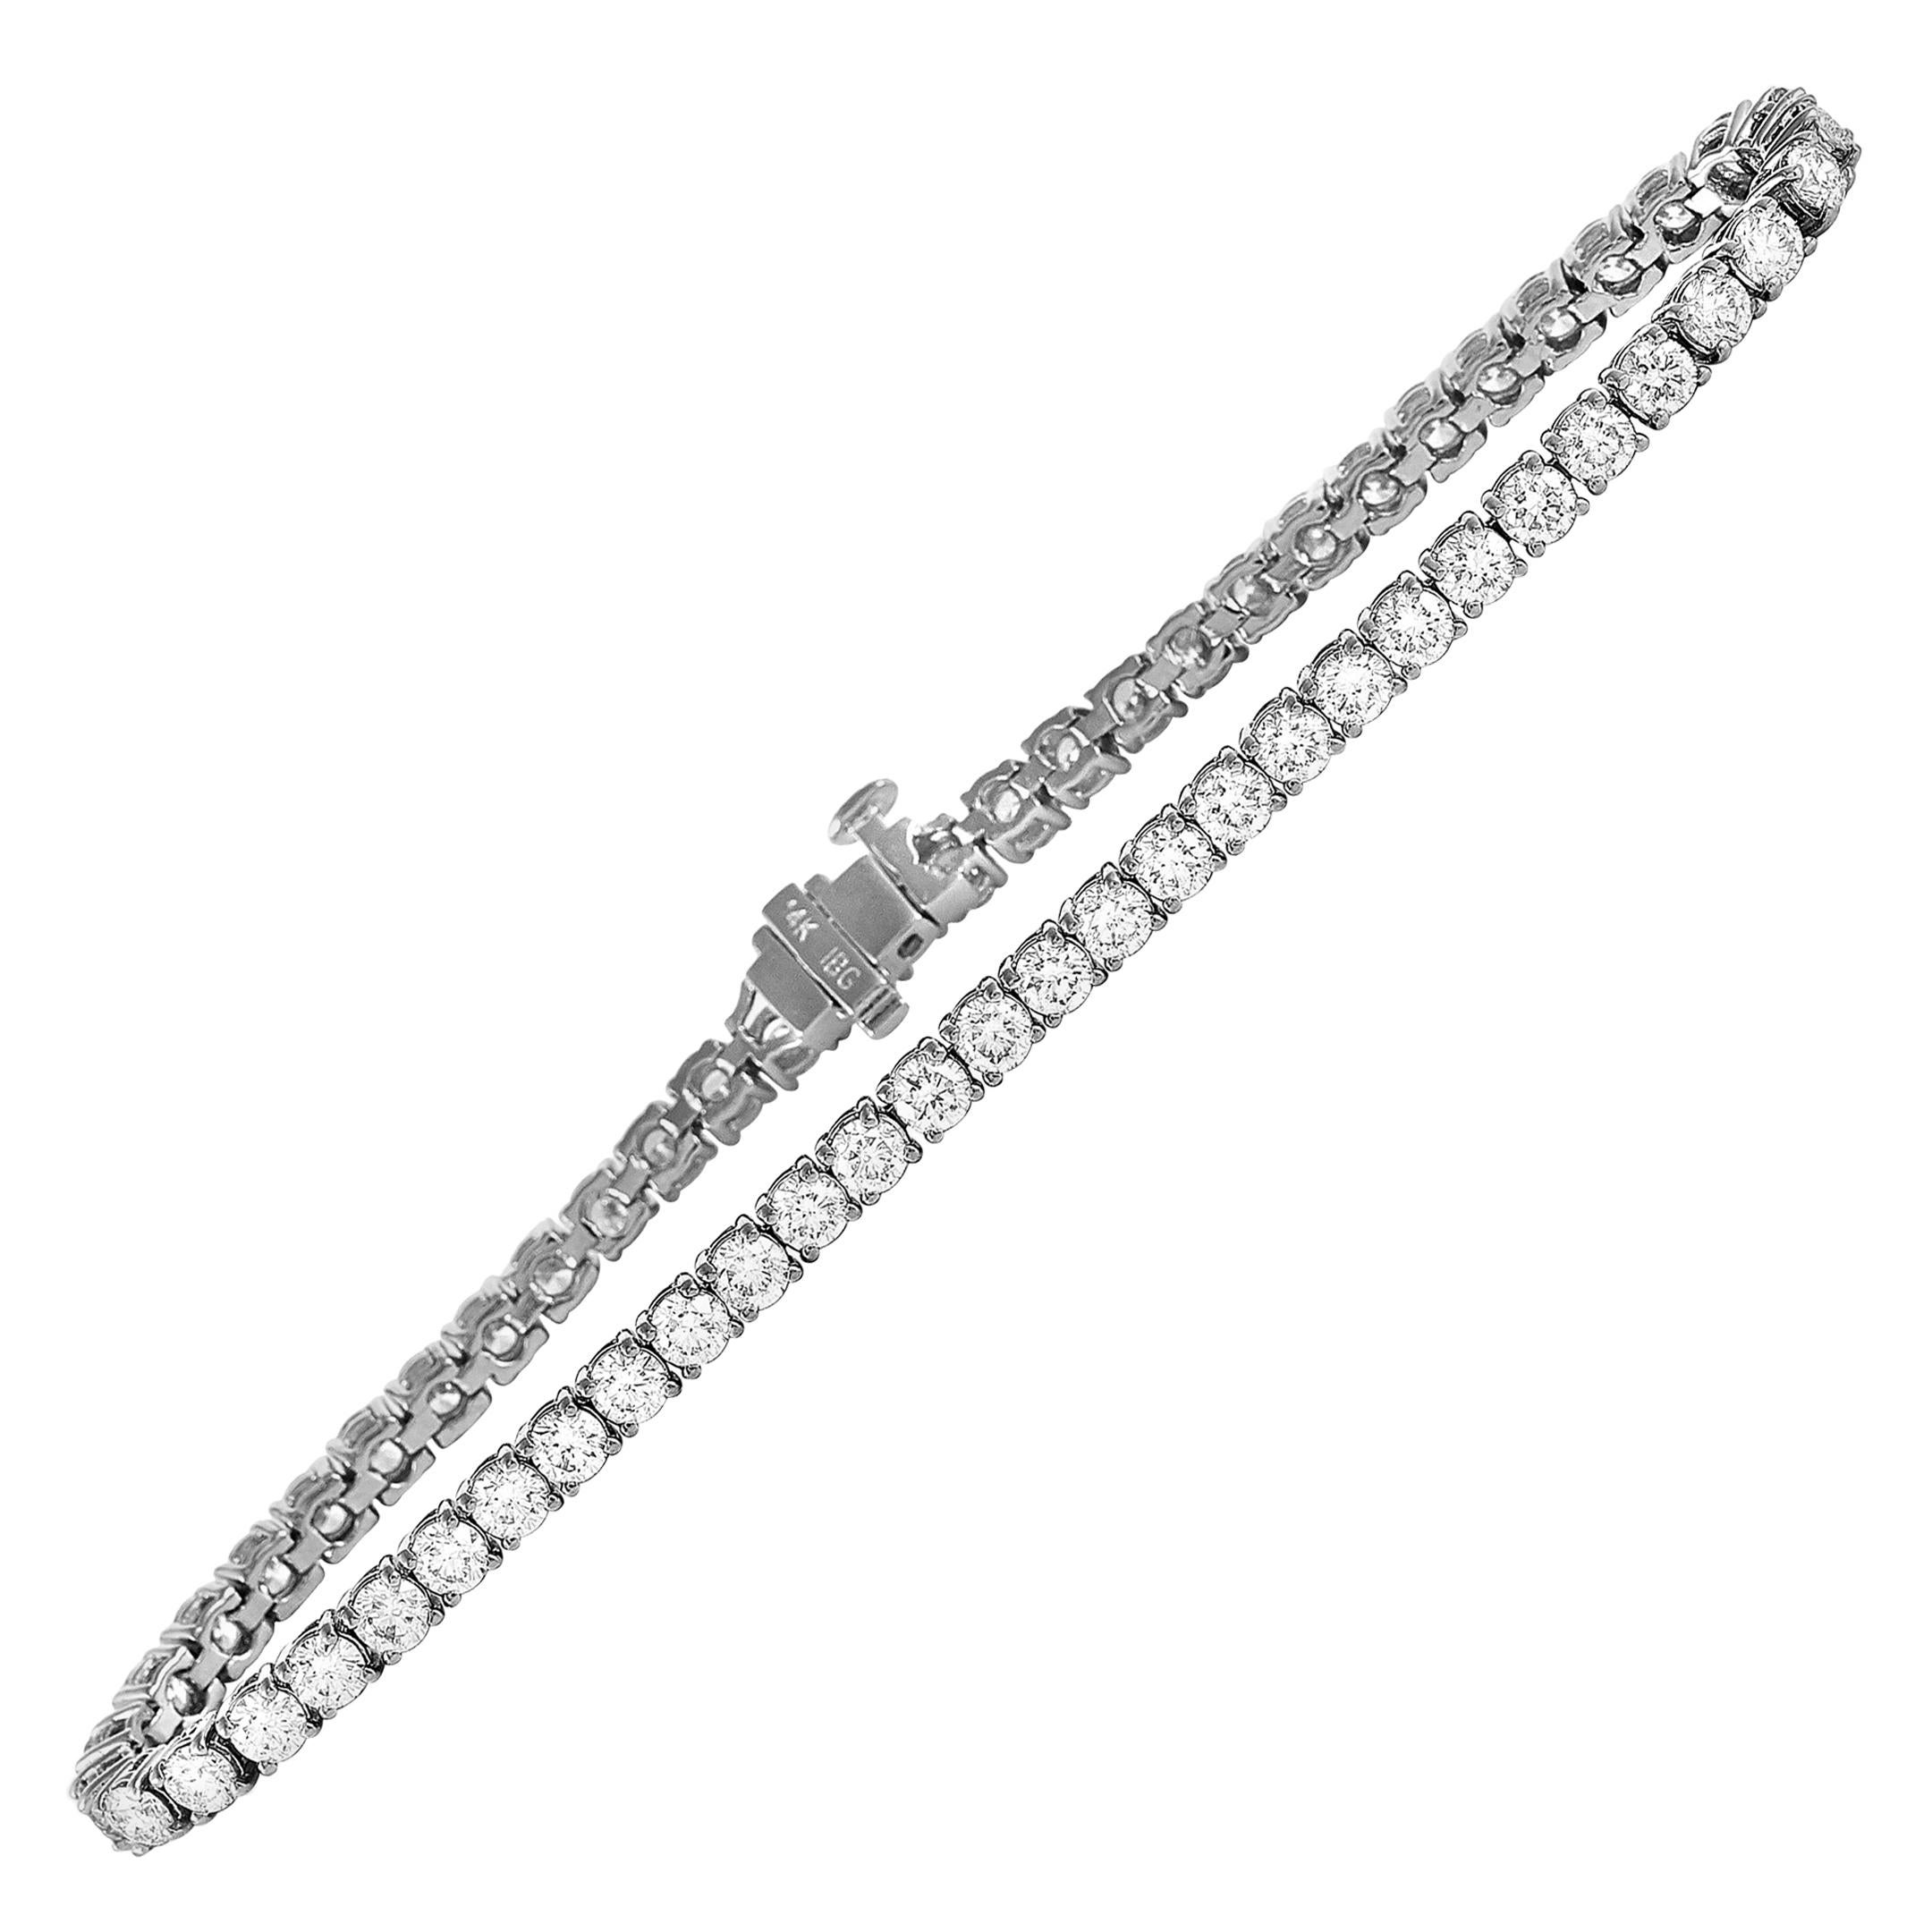 LB Exclusive 14 Karat White Gold 5.65 Carat Diamond Tennis Bracelet